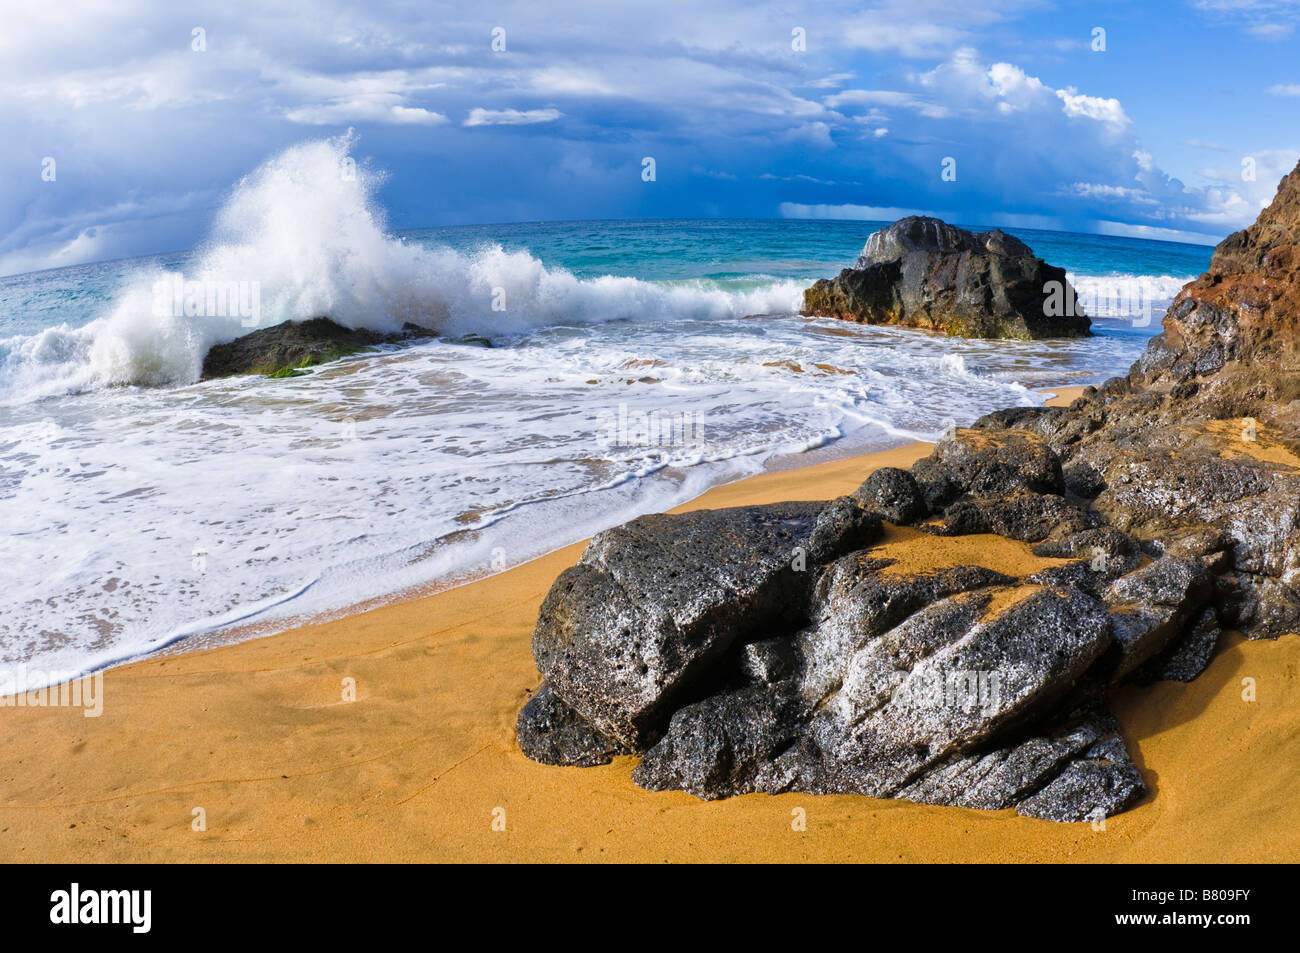 Why rock stacking at Hanakapiai Beach isn't considered pono (right) -  Hawaii Magazine